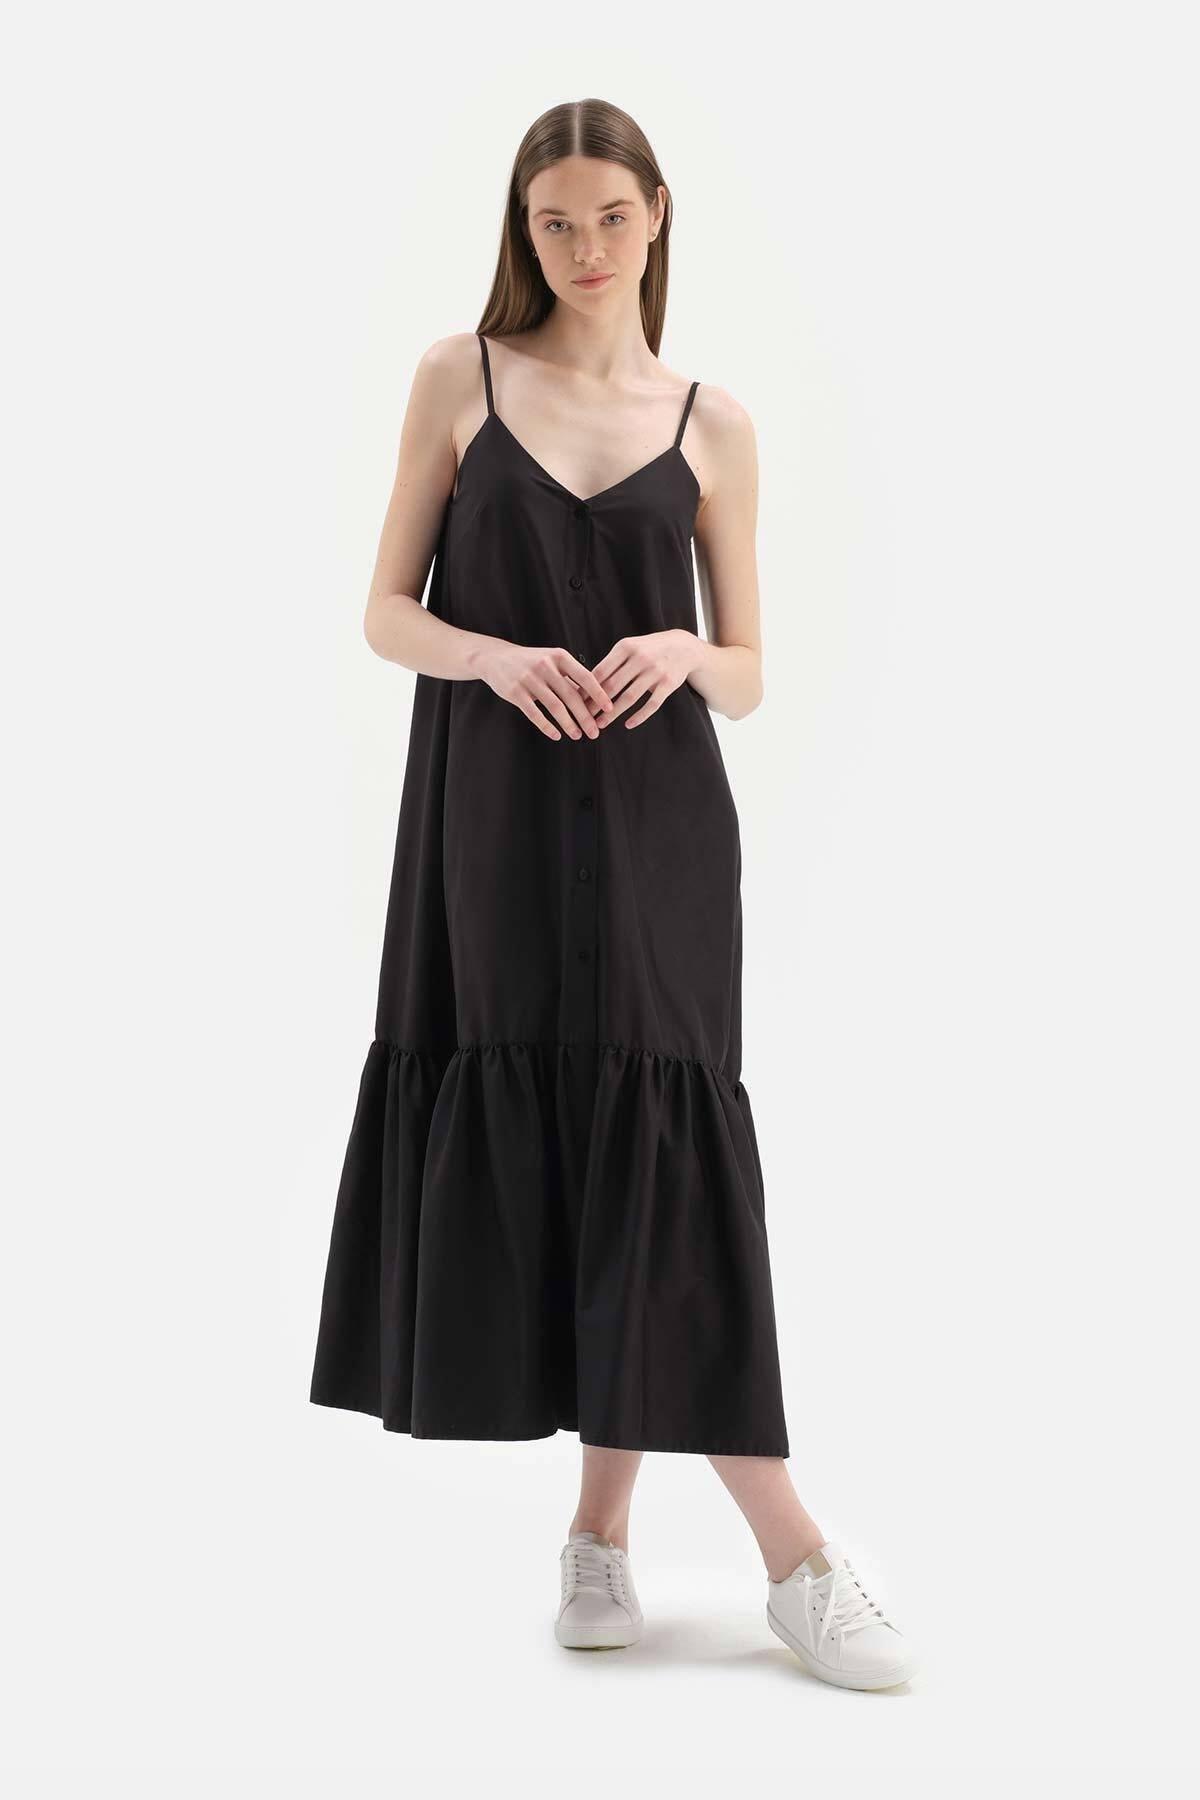 Dagi - Black Buttoned Woven Dress